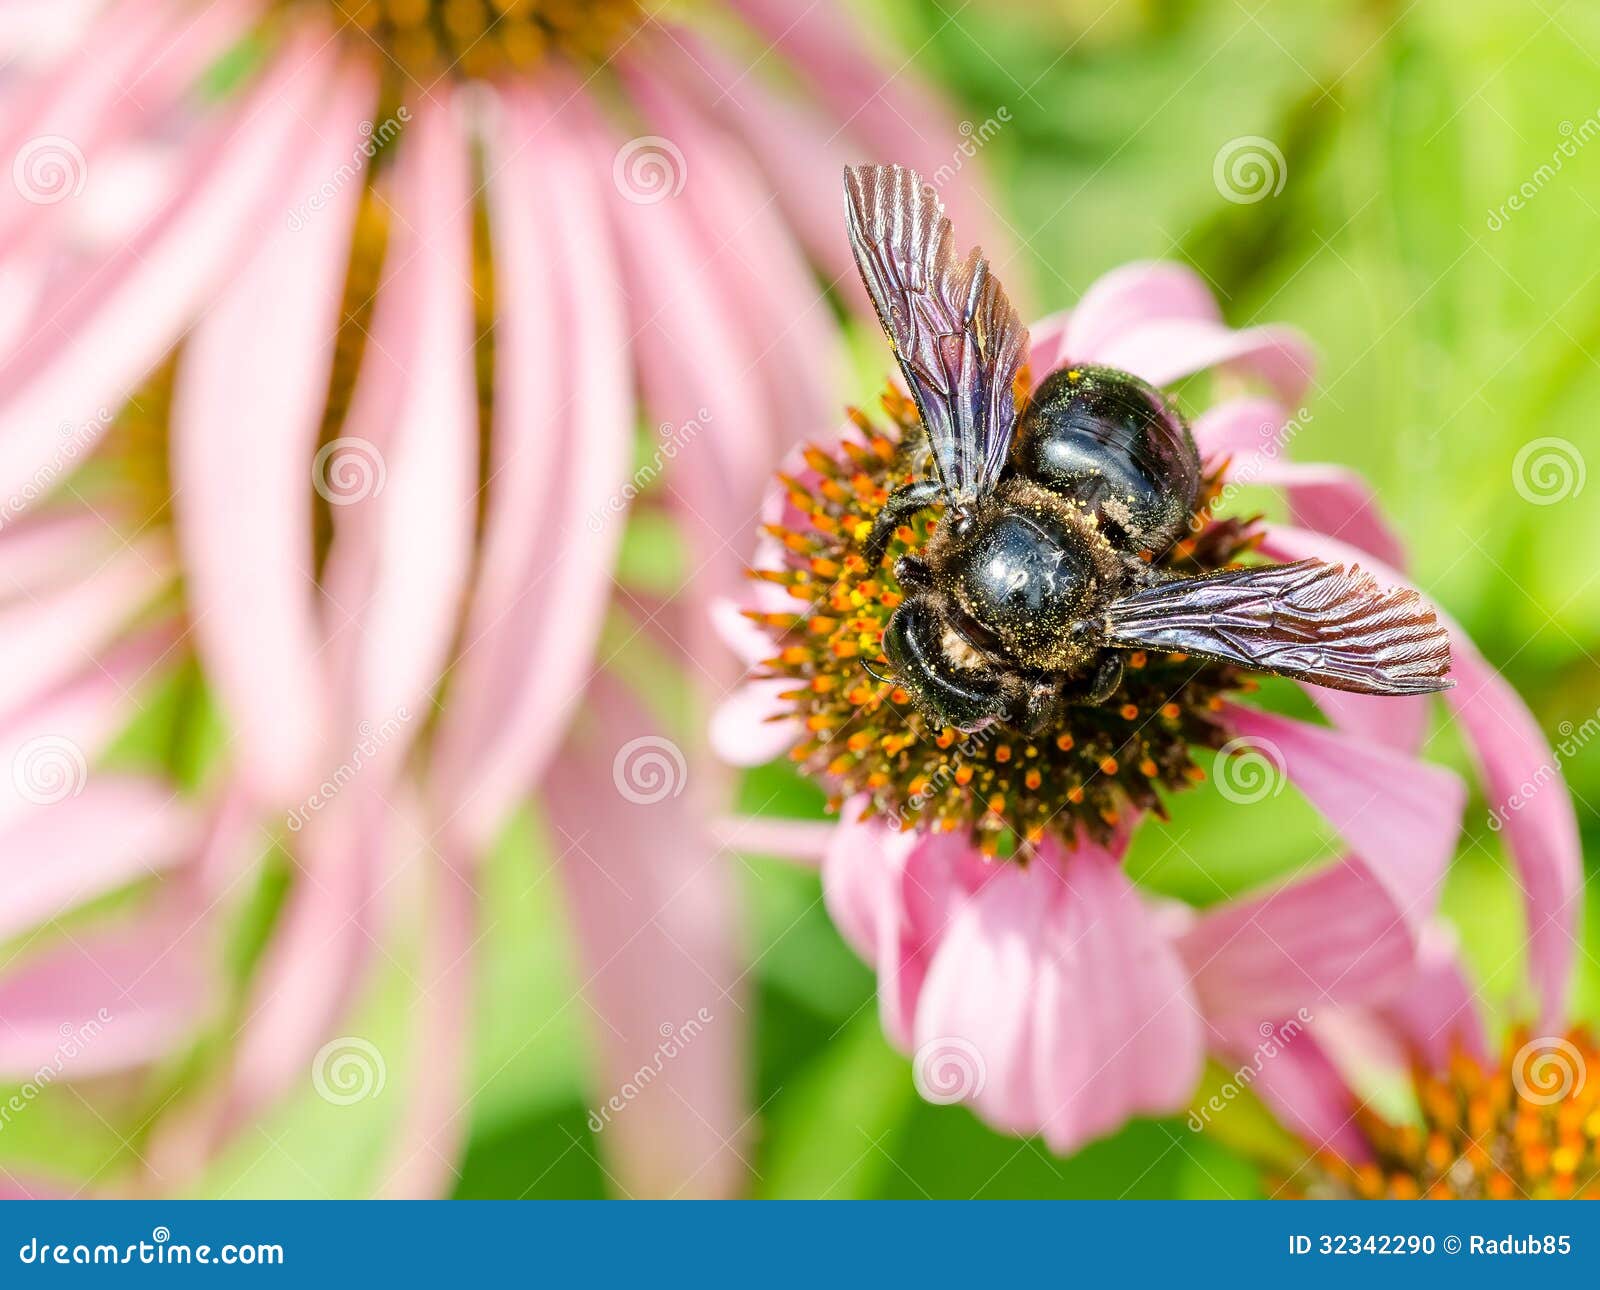 bumble bee gathering polen